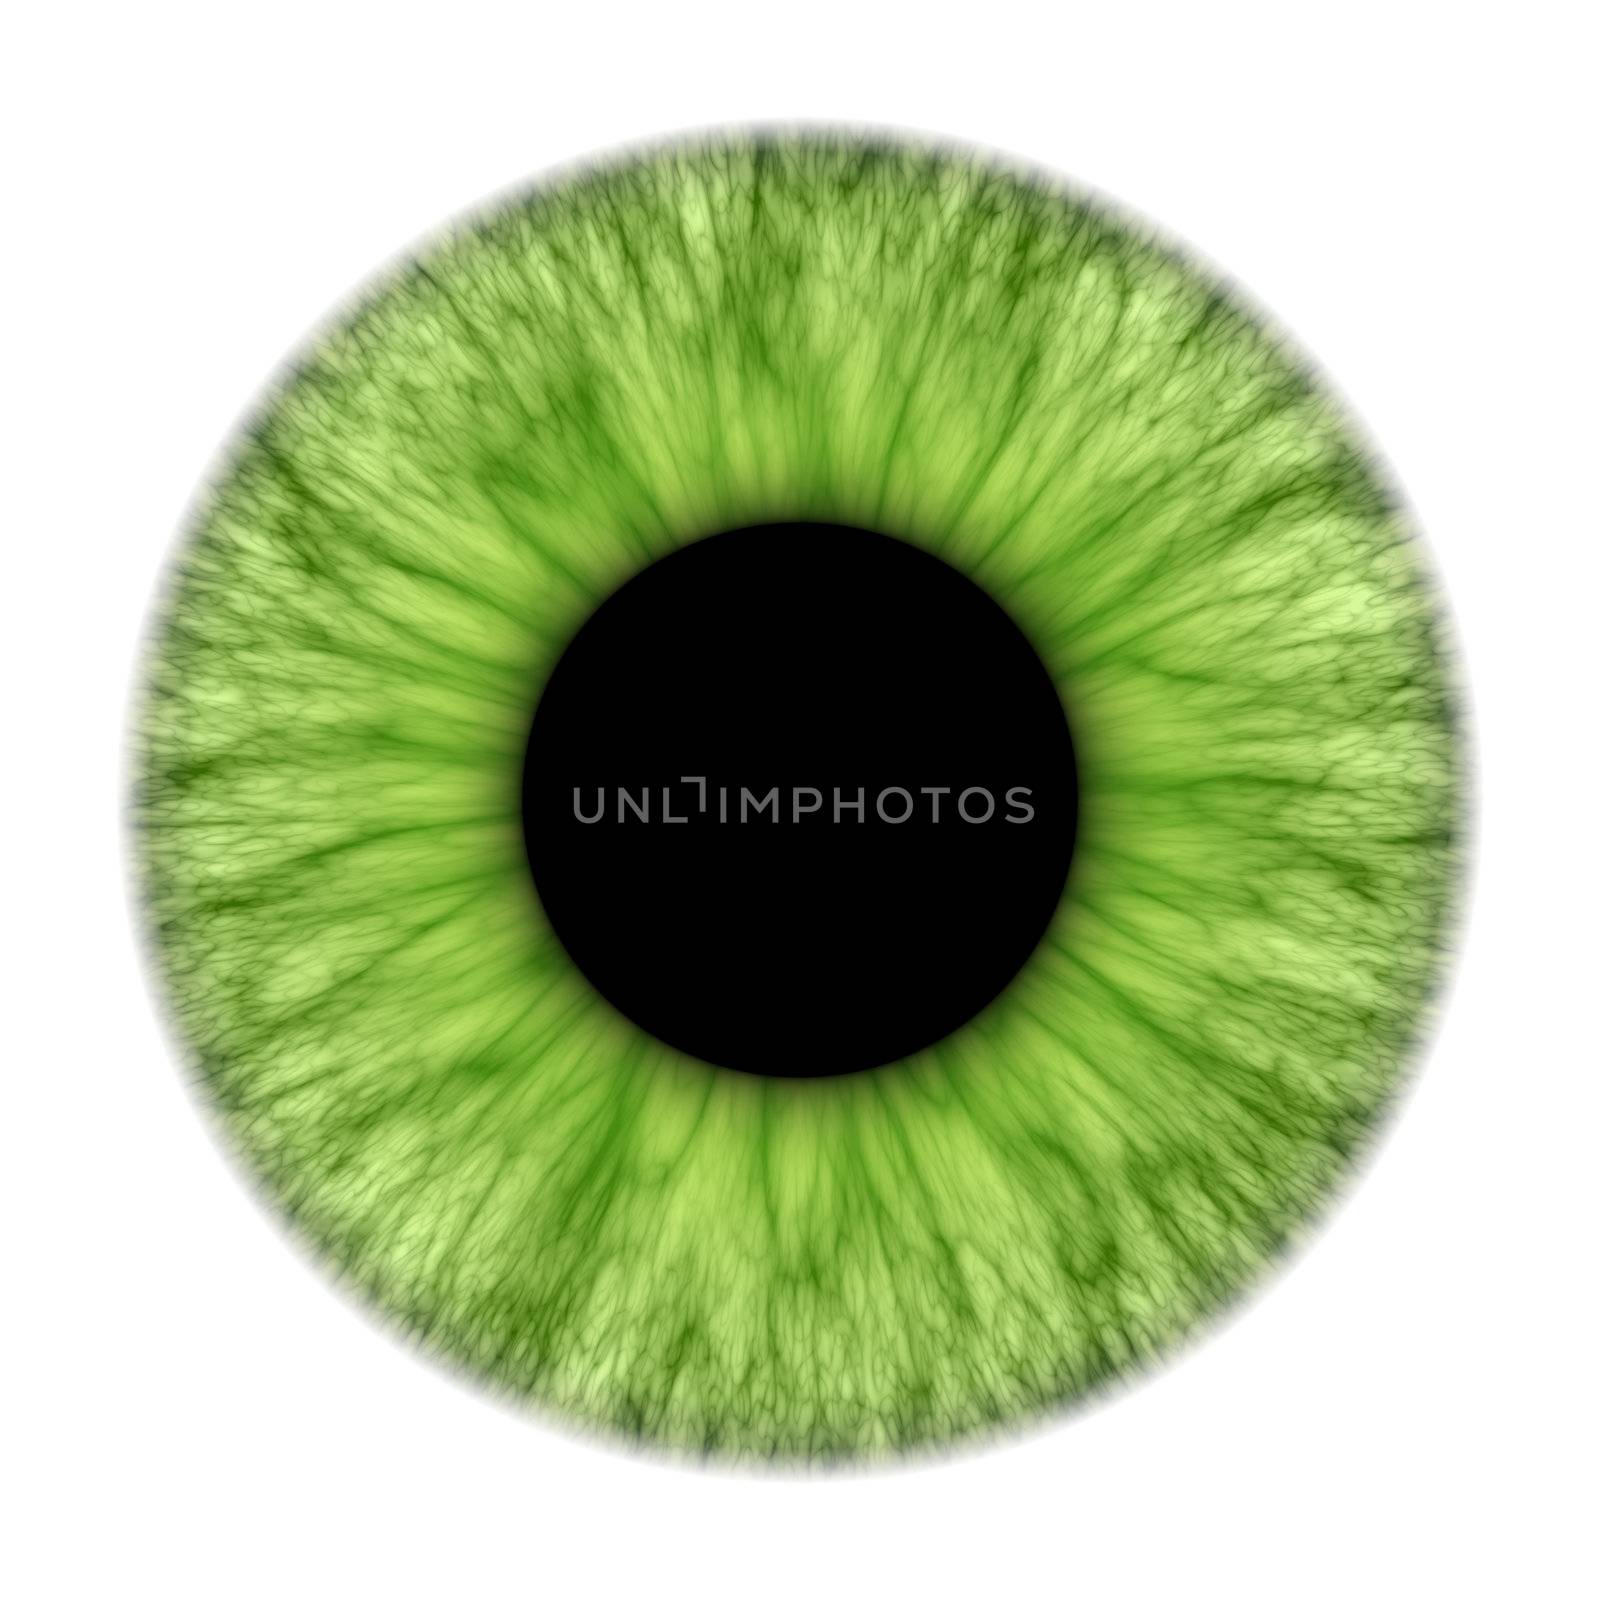 An illustration of a nice green iris texture